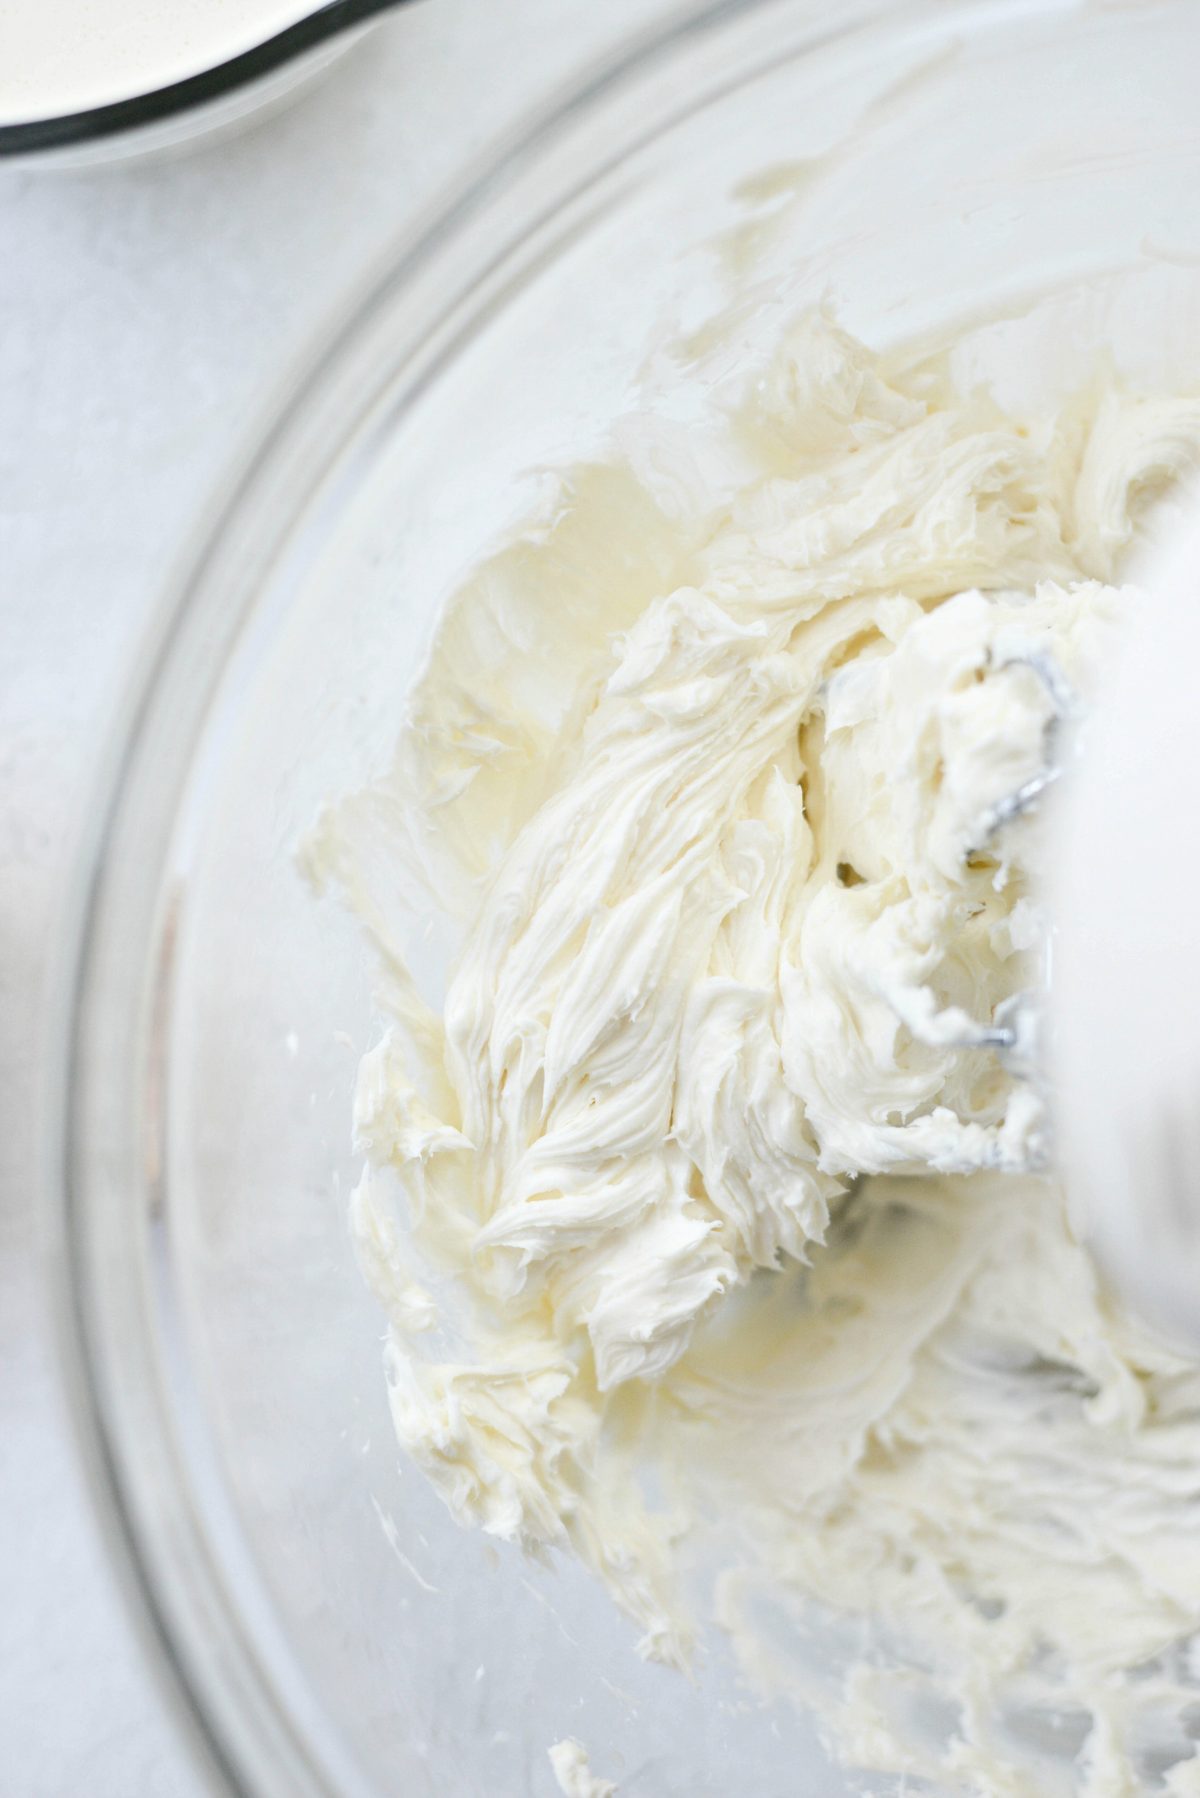 cream together until smooth.